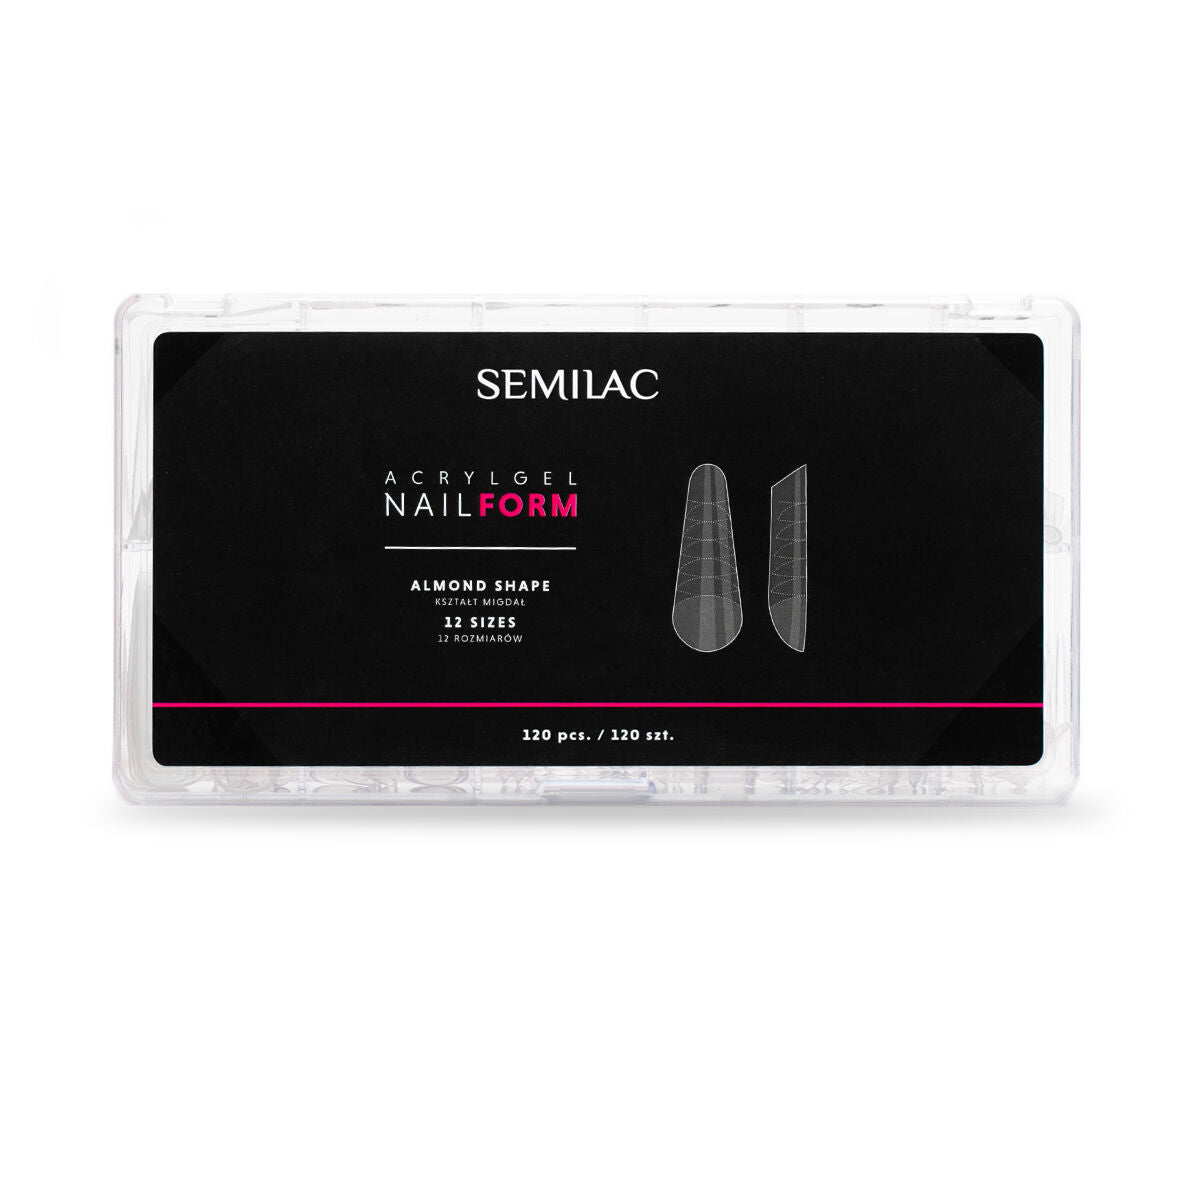 Semilac Acrylgel Nail Form Almond 120 Pcs. - Semilac UK